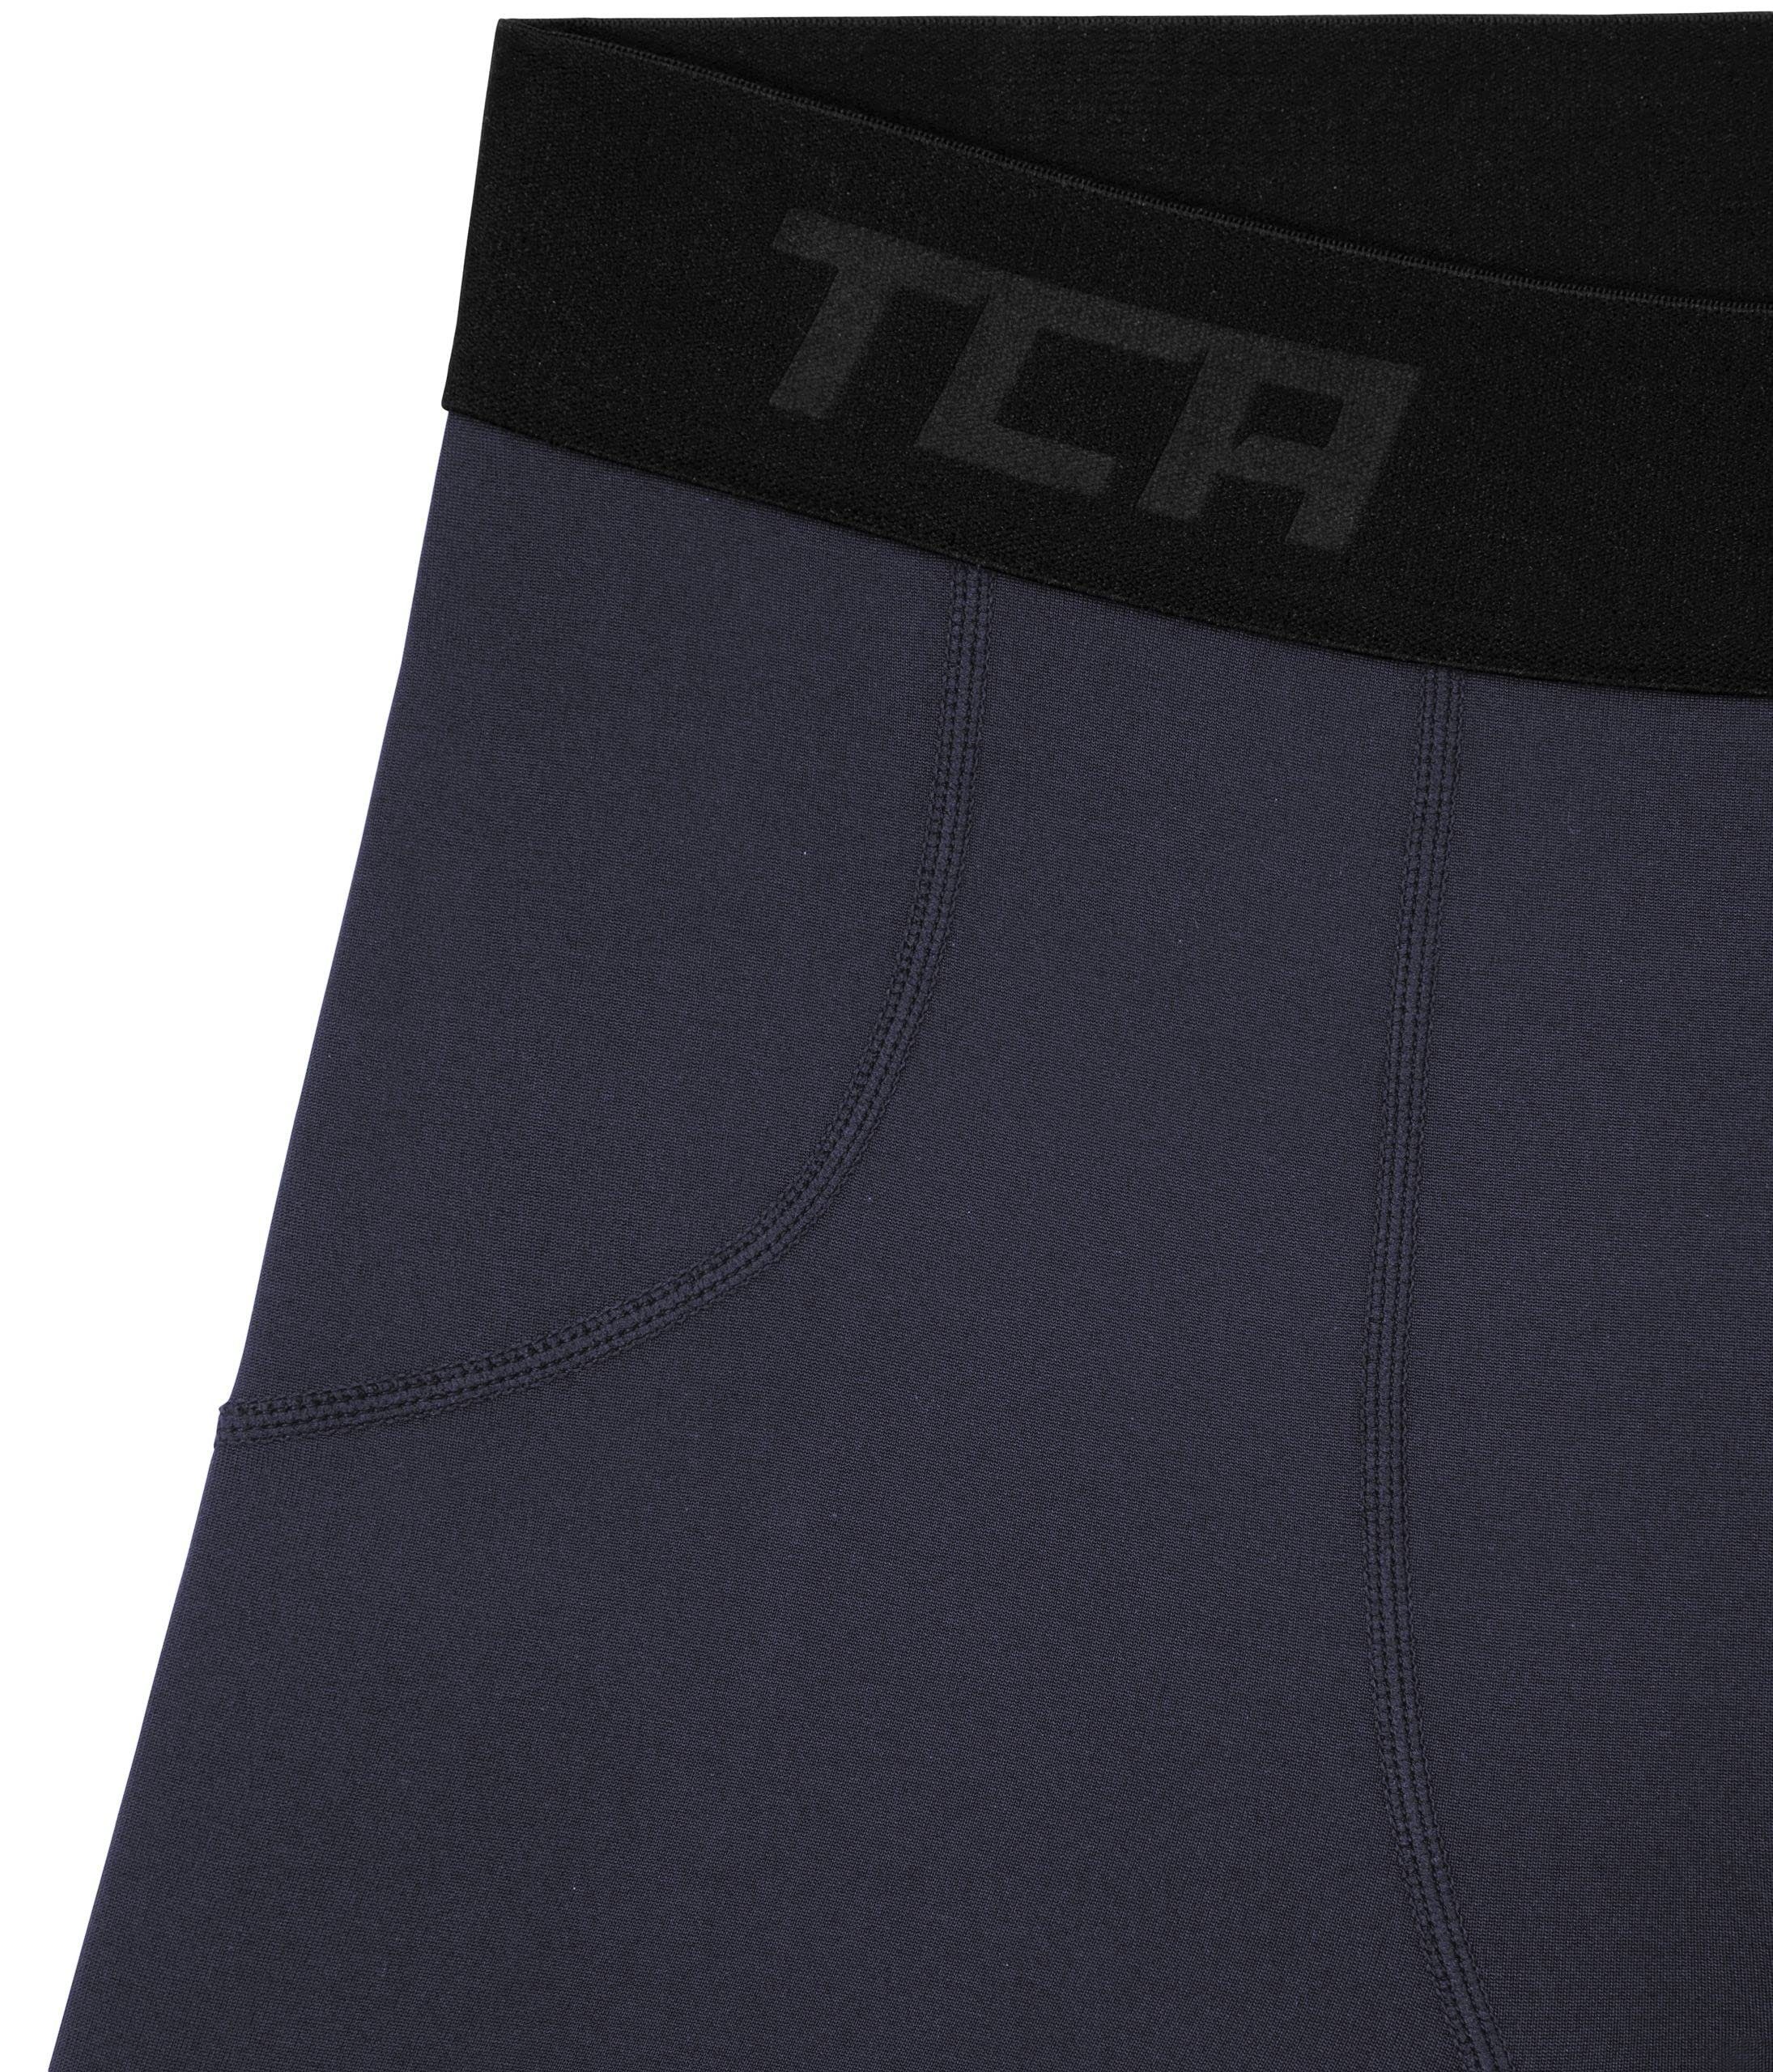 SuperThermal Herren Dunkelgrau Kompressions TCA - TCA Unterziehshirt Shorts